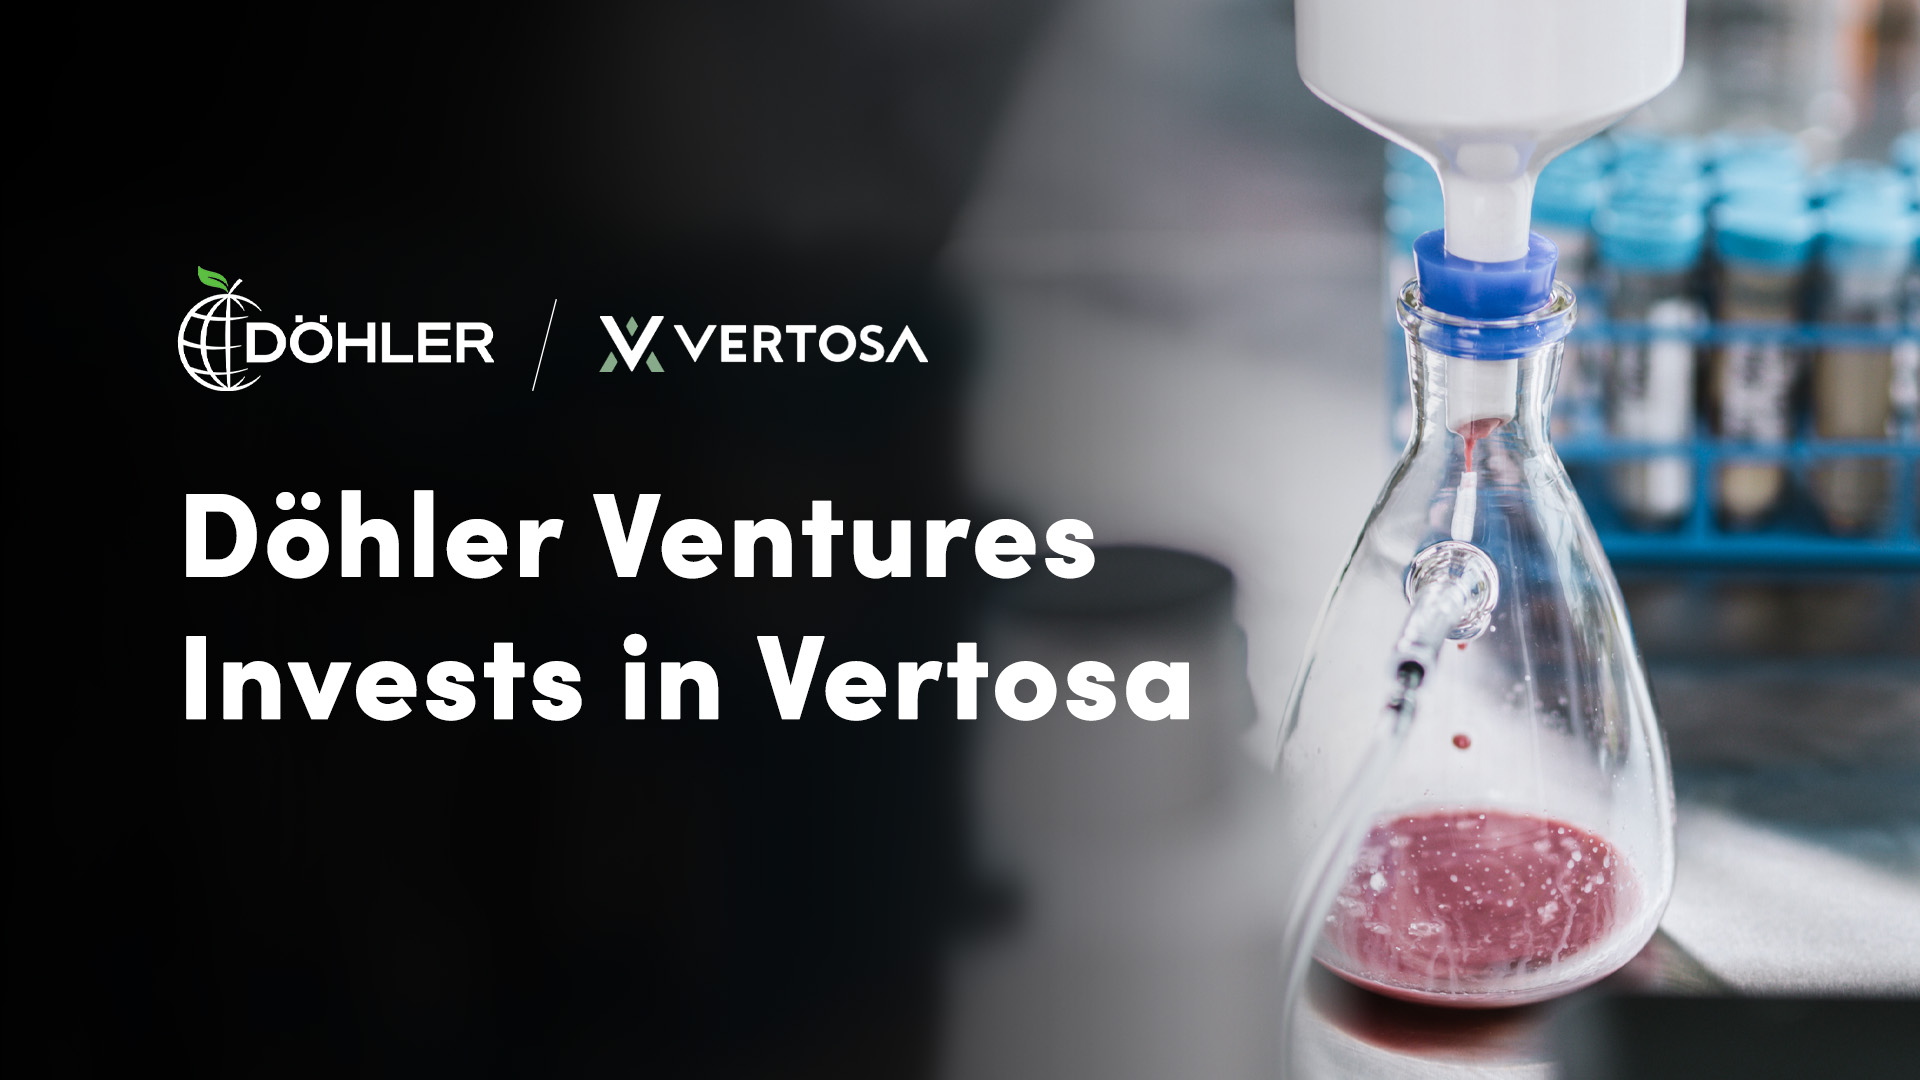 Döhler Ventures Invests in Vertosa – A Strategic Partnership to Develop Innovative Life Science Beverages